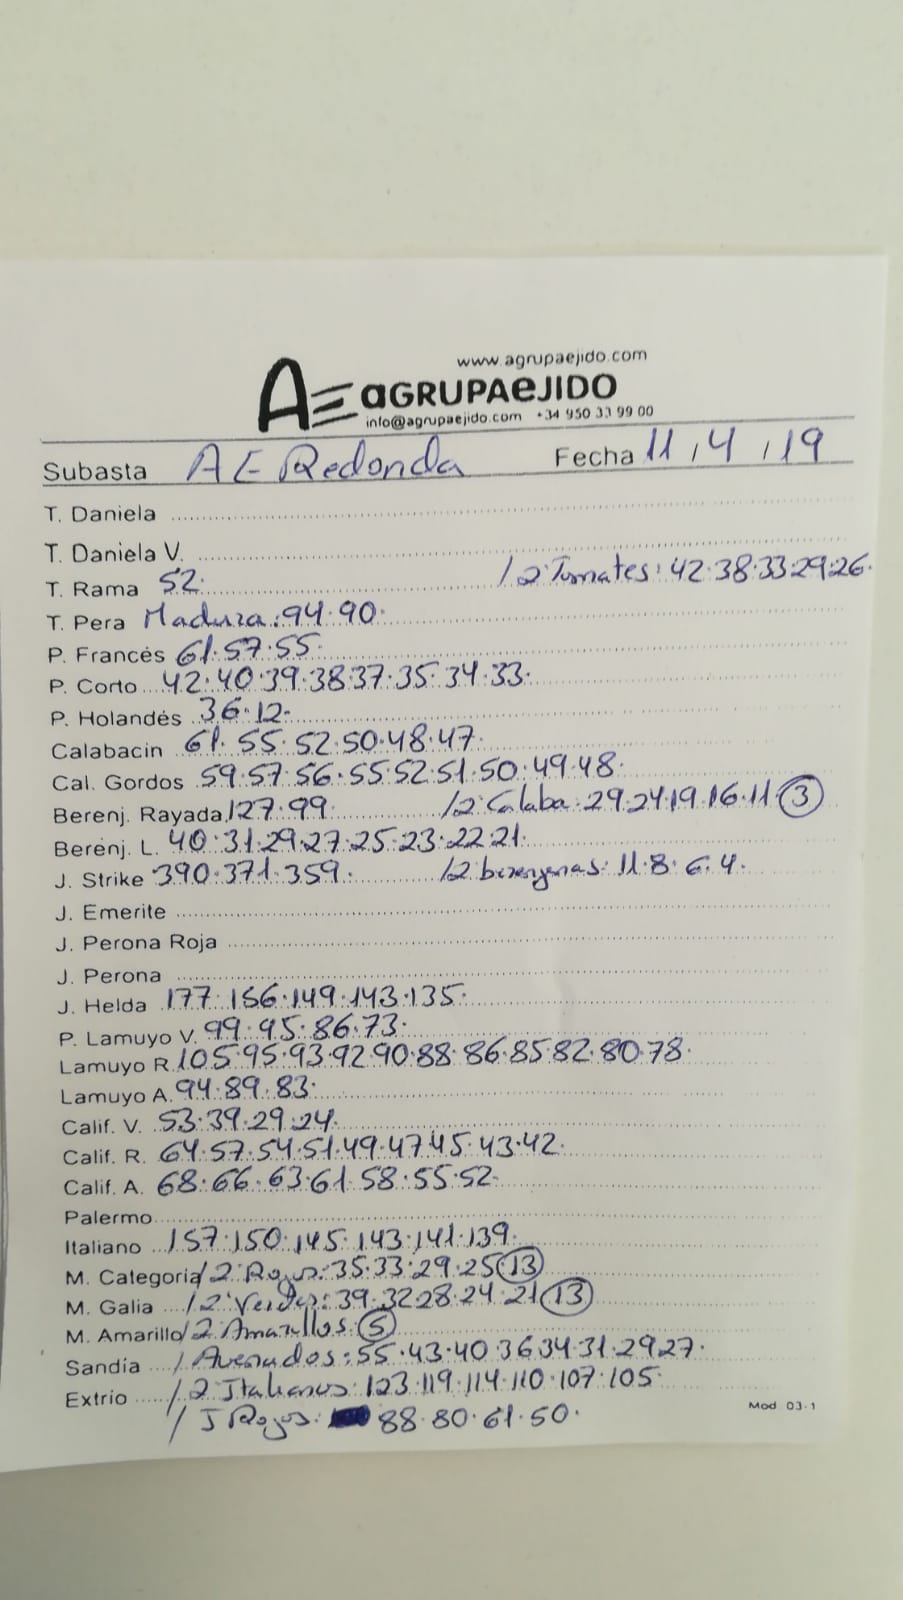 Subasta hortofrutícola AgrupaEjido La Redonda 11 de Abril 2019